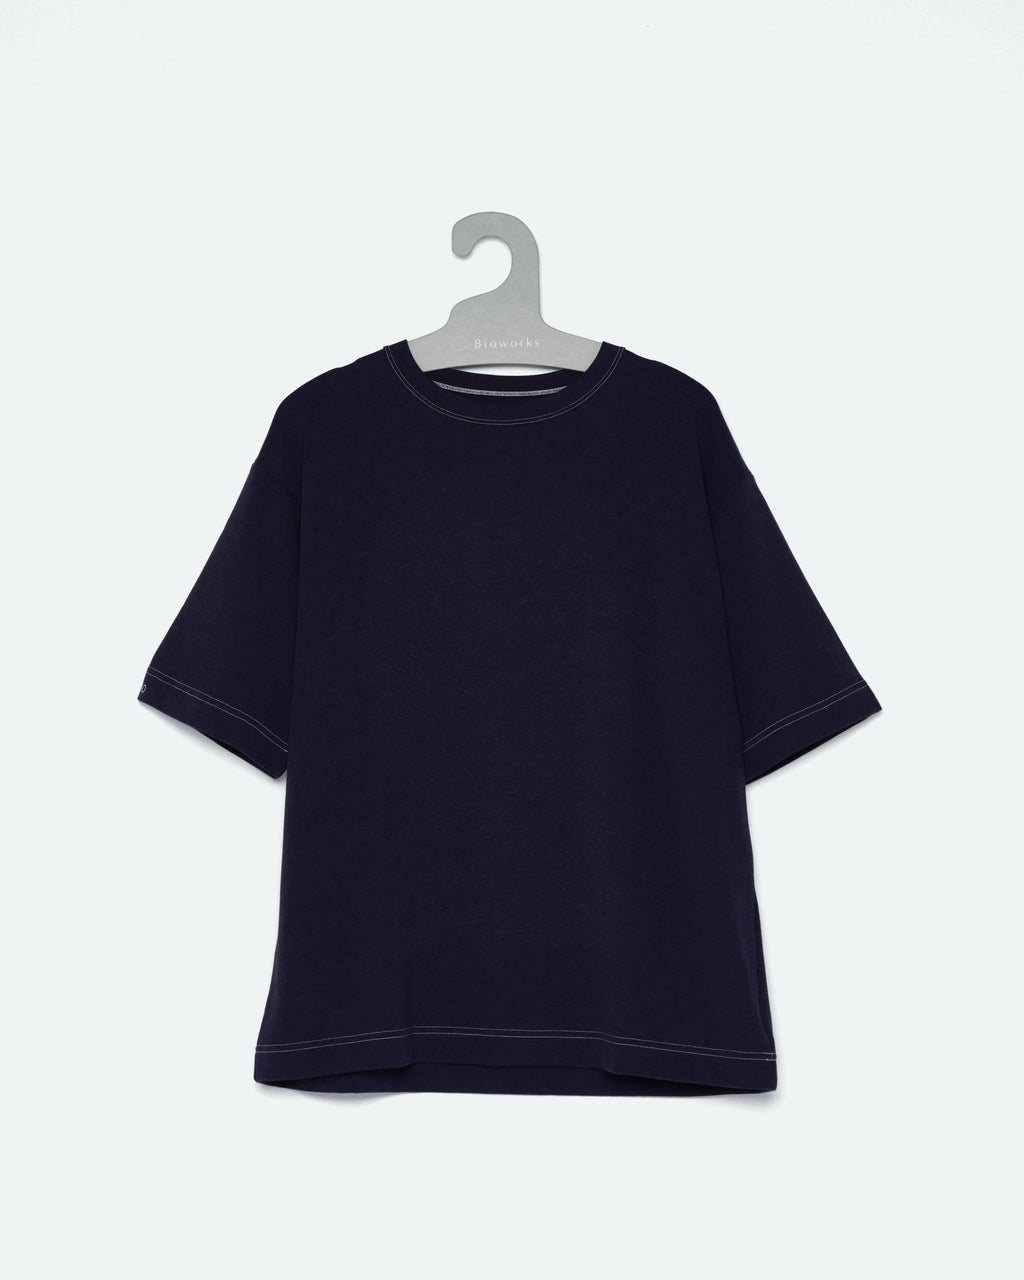 【renewal SALE】旧デザイン Tシャツ(ネイビー)